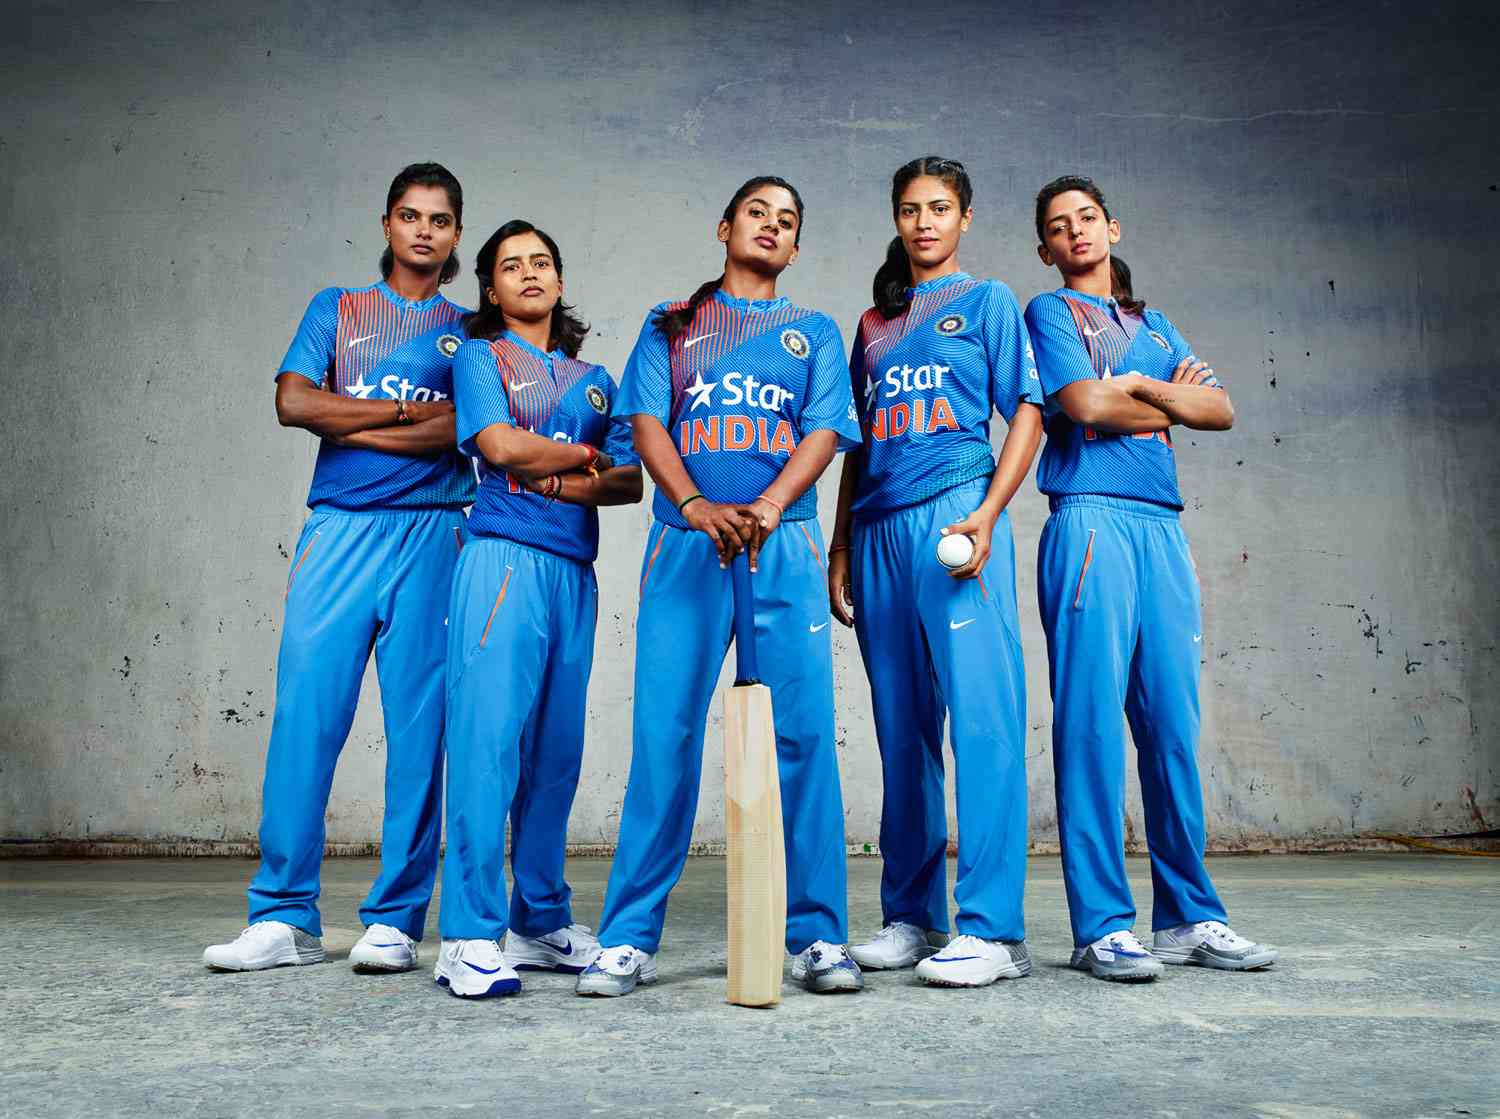 india national cricket team photos in the saint studio